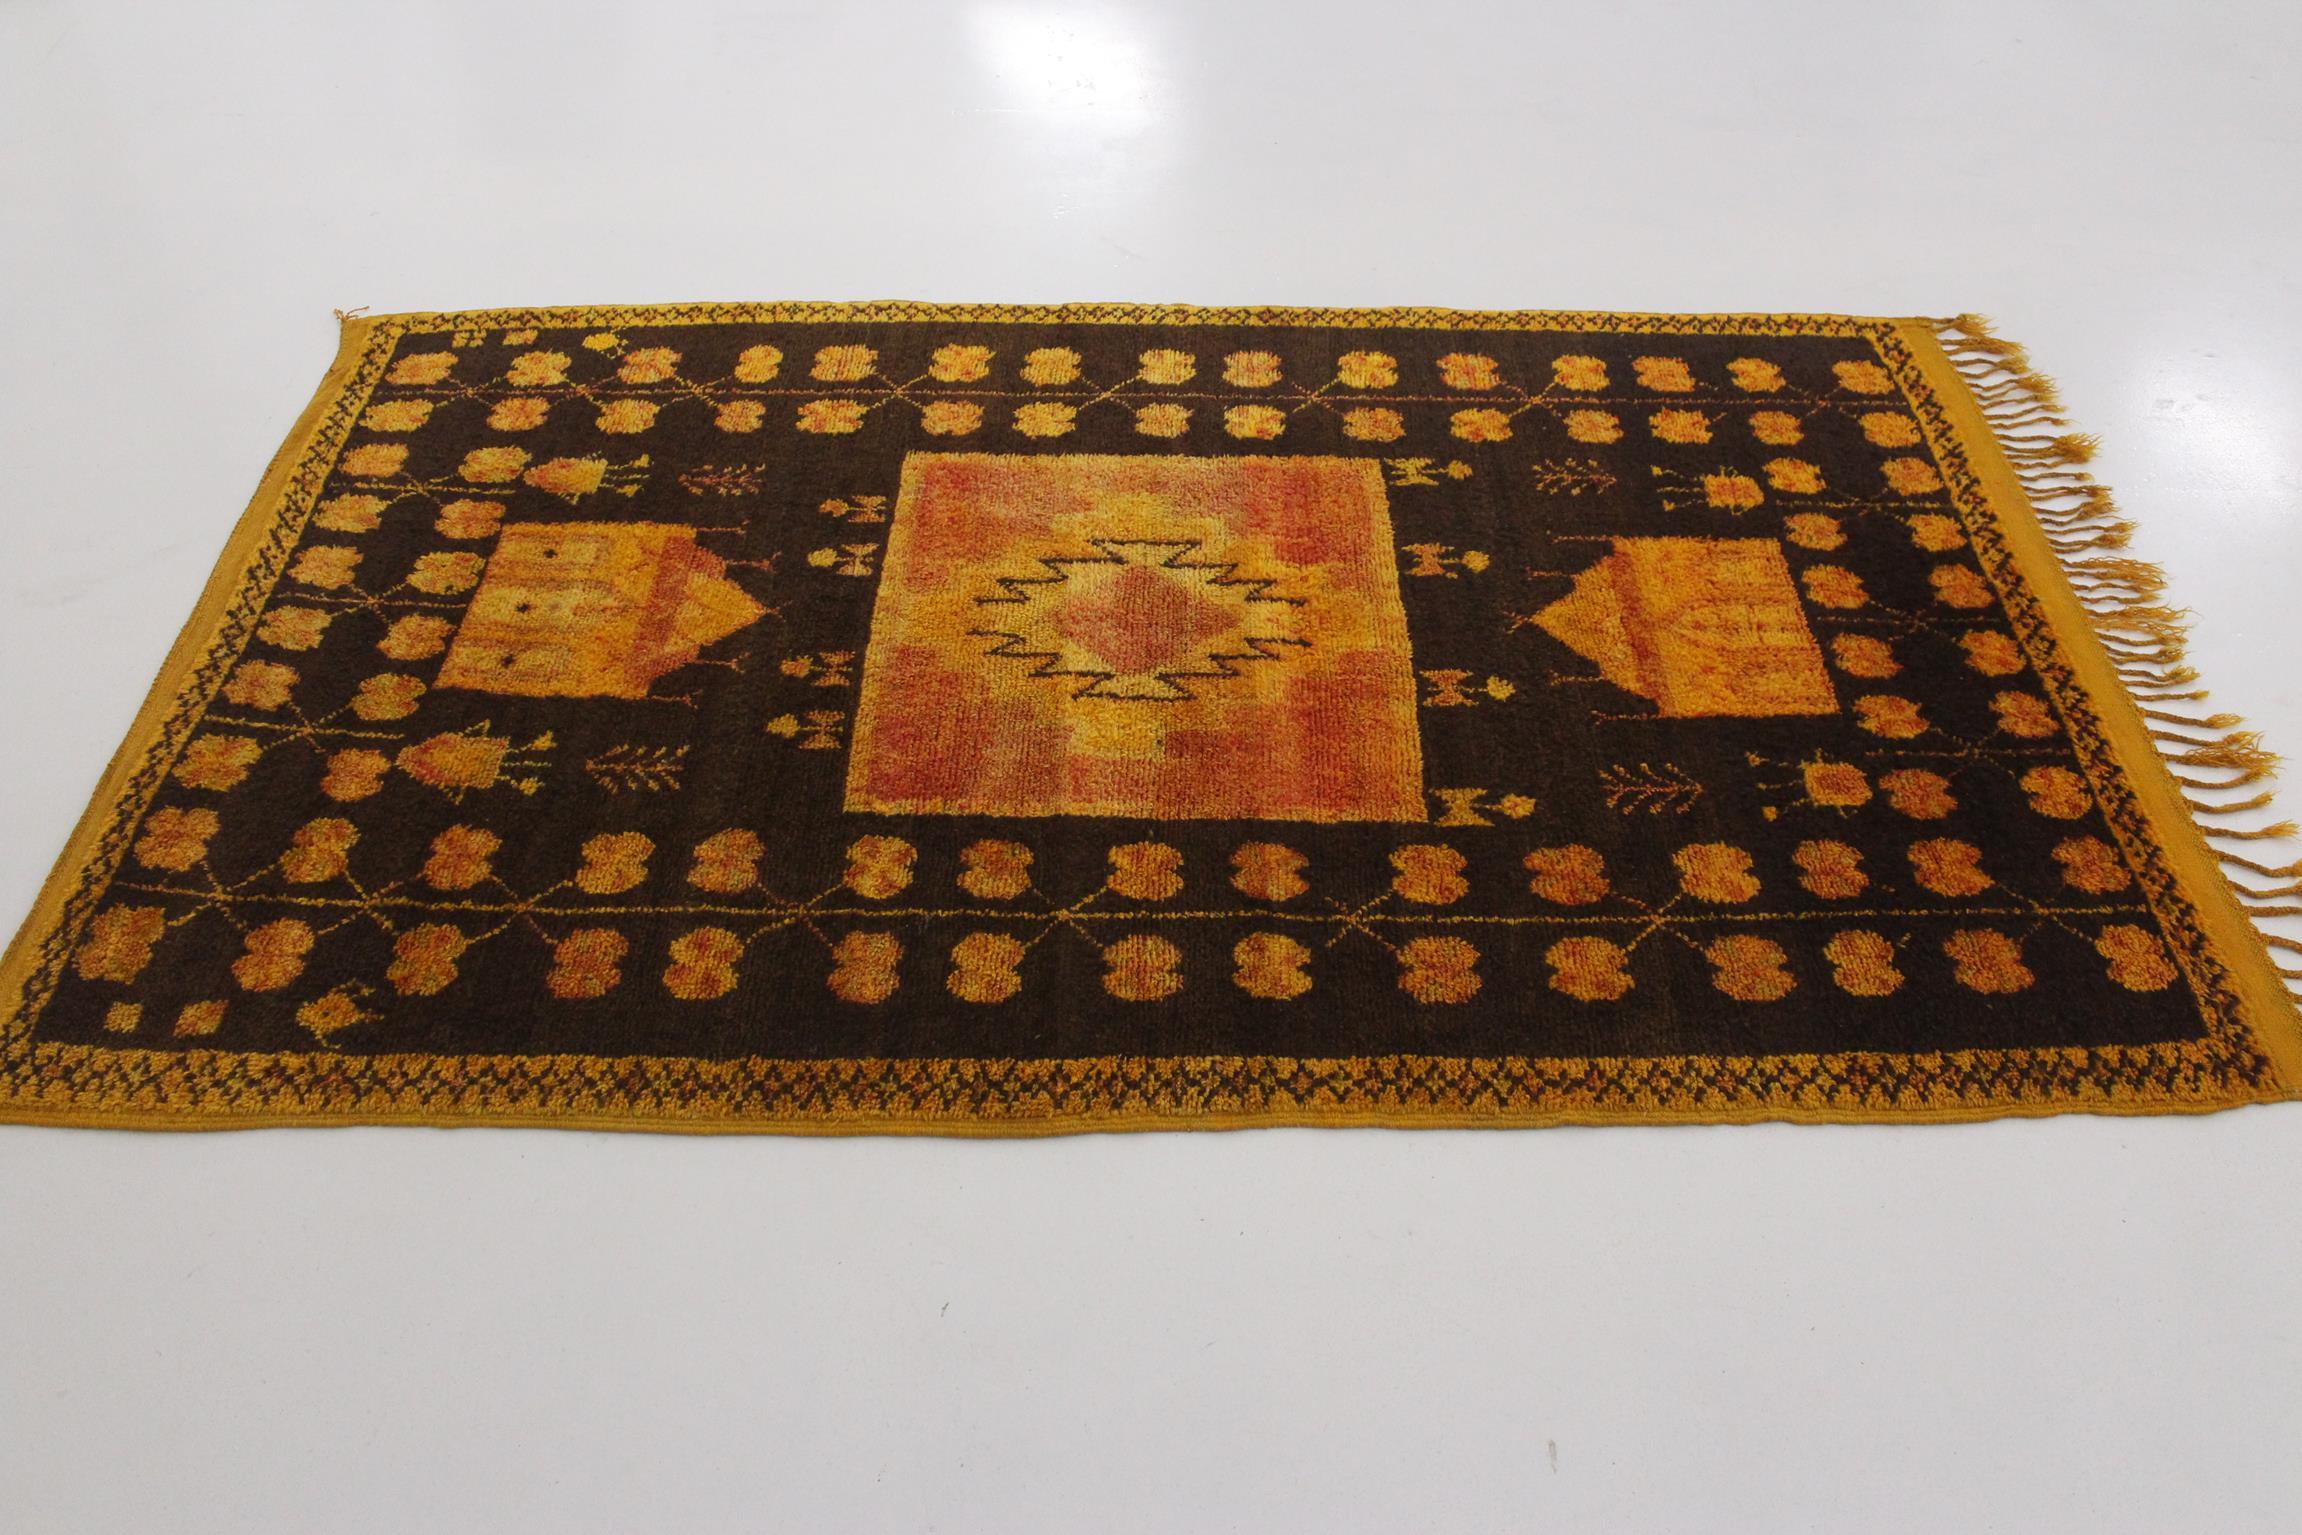 Hand-Woven Vintage Moroccan Taznakht rug - Black/orange/yellow - 4.5x7.2feet / 137x220cm For Sale